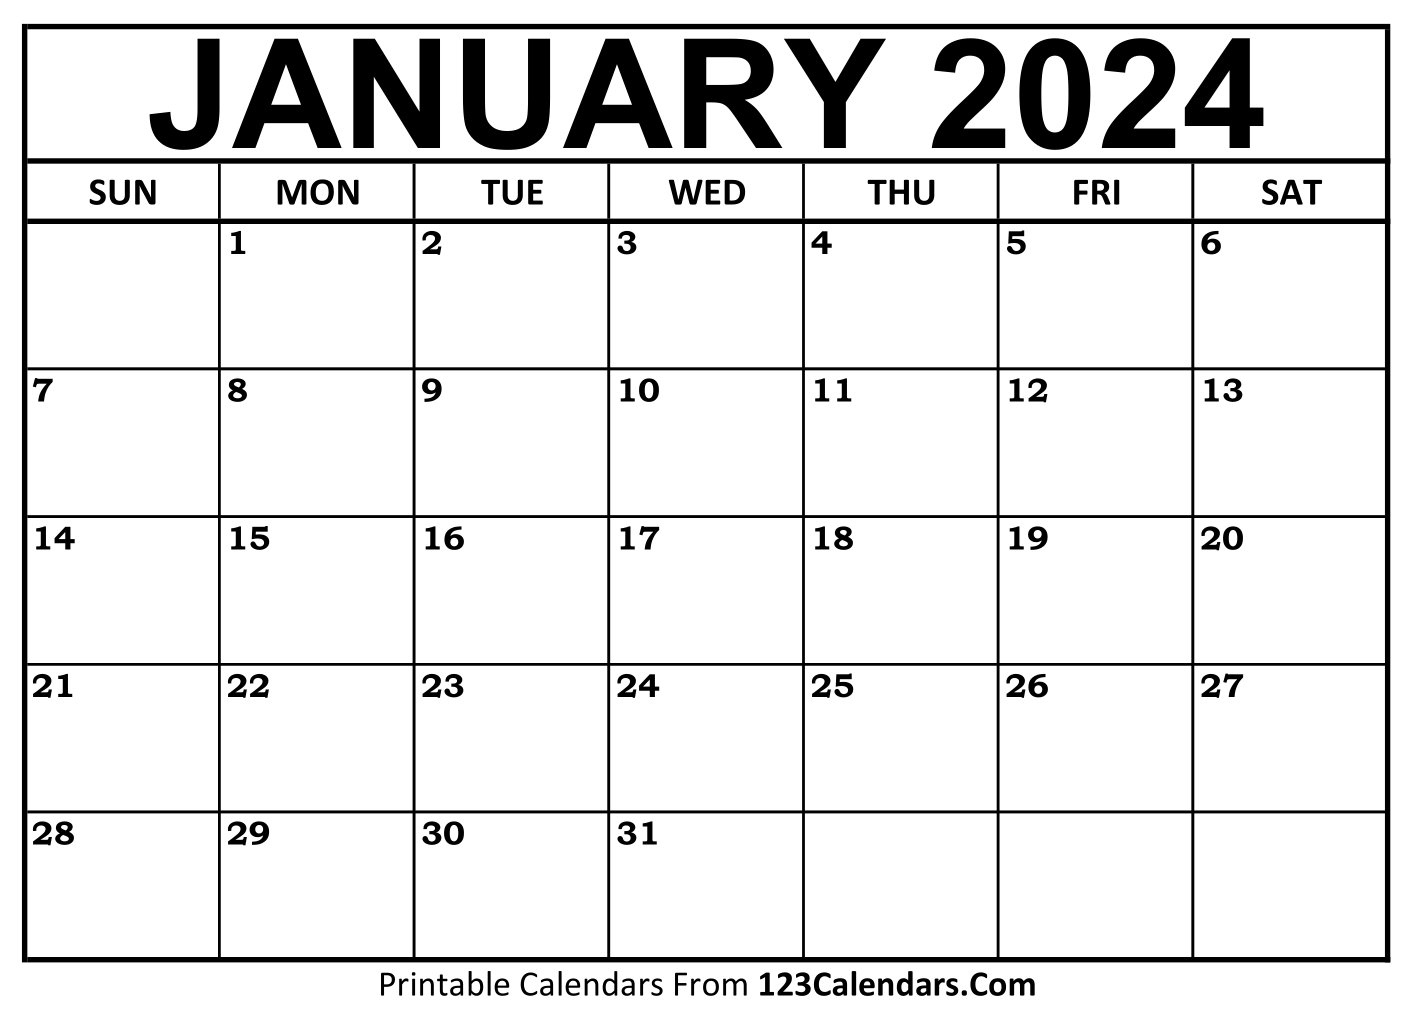 Printable January 2024 Calendar Templates - 123Calendars | January Calendar 2024